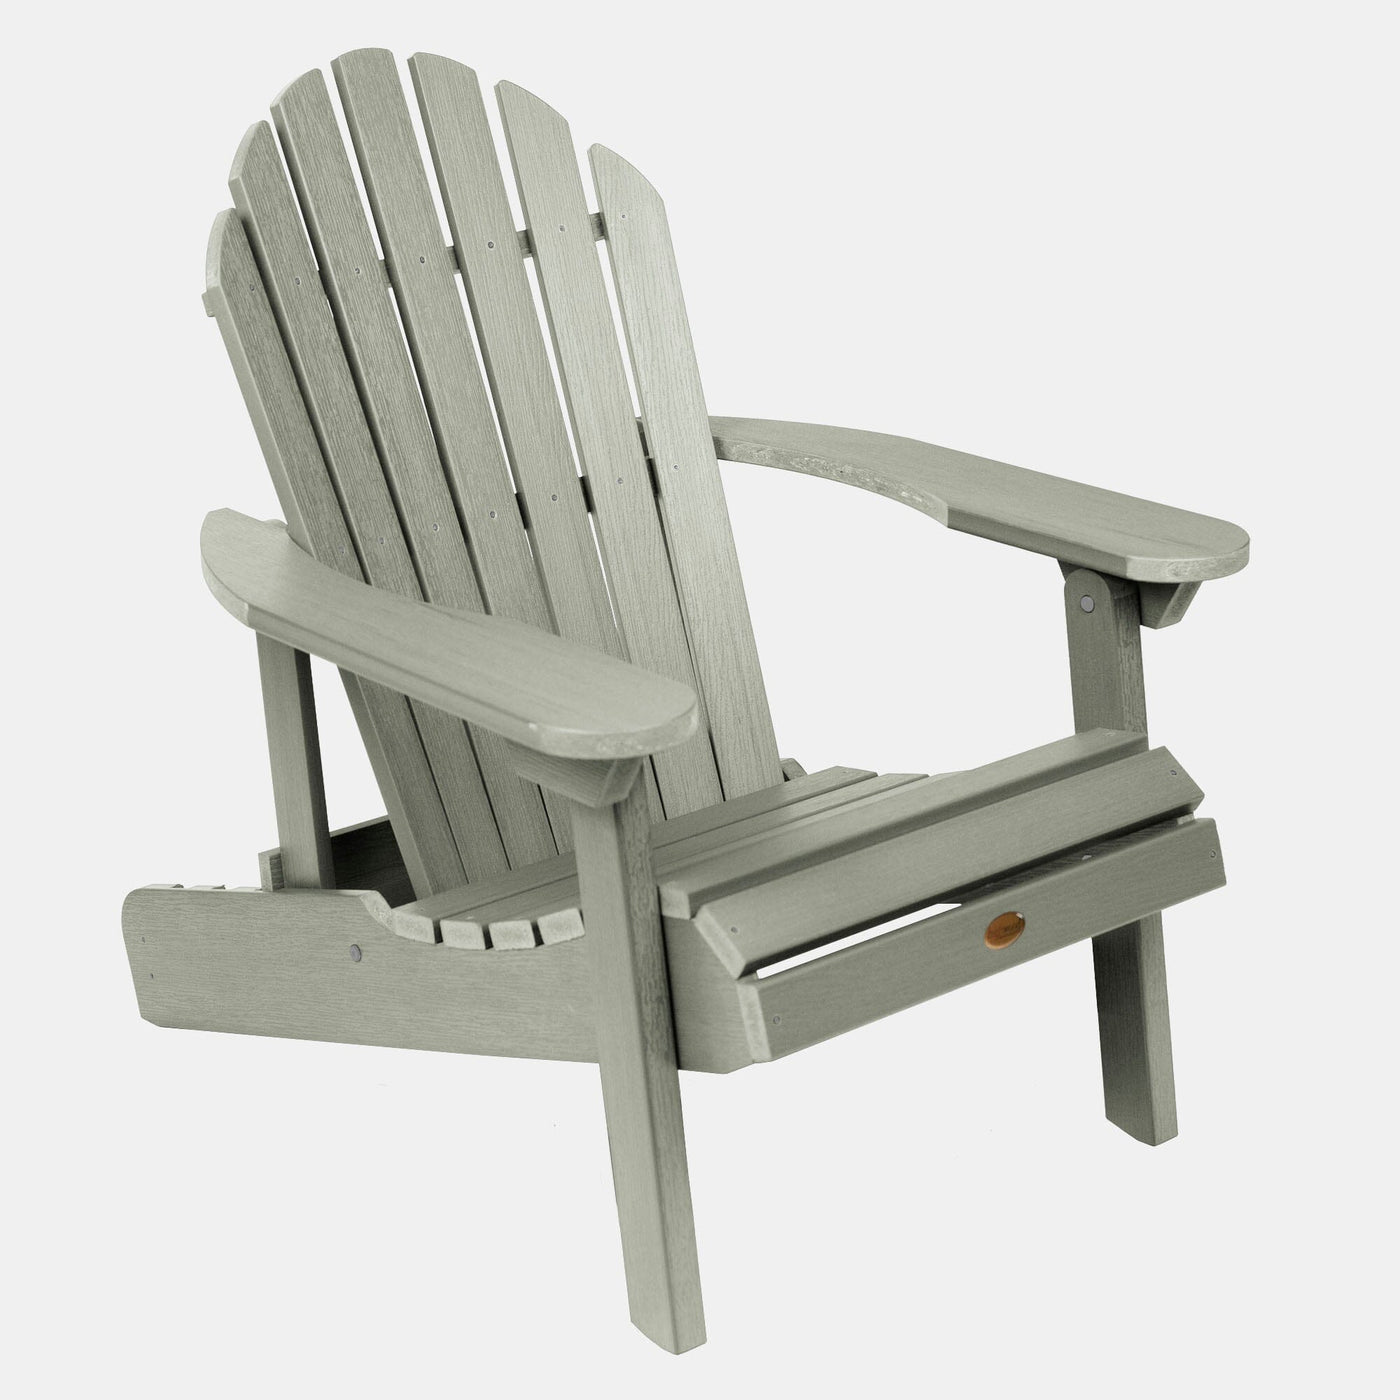 Hamilton Adirondack chair in Eucalyptus green